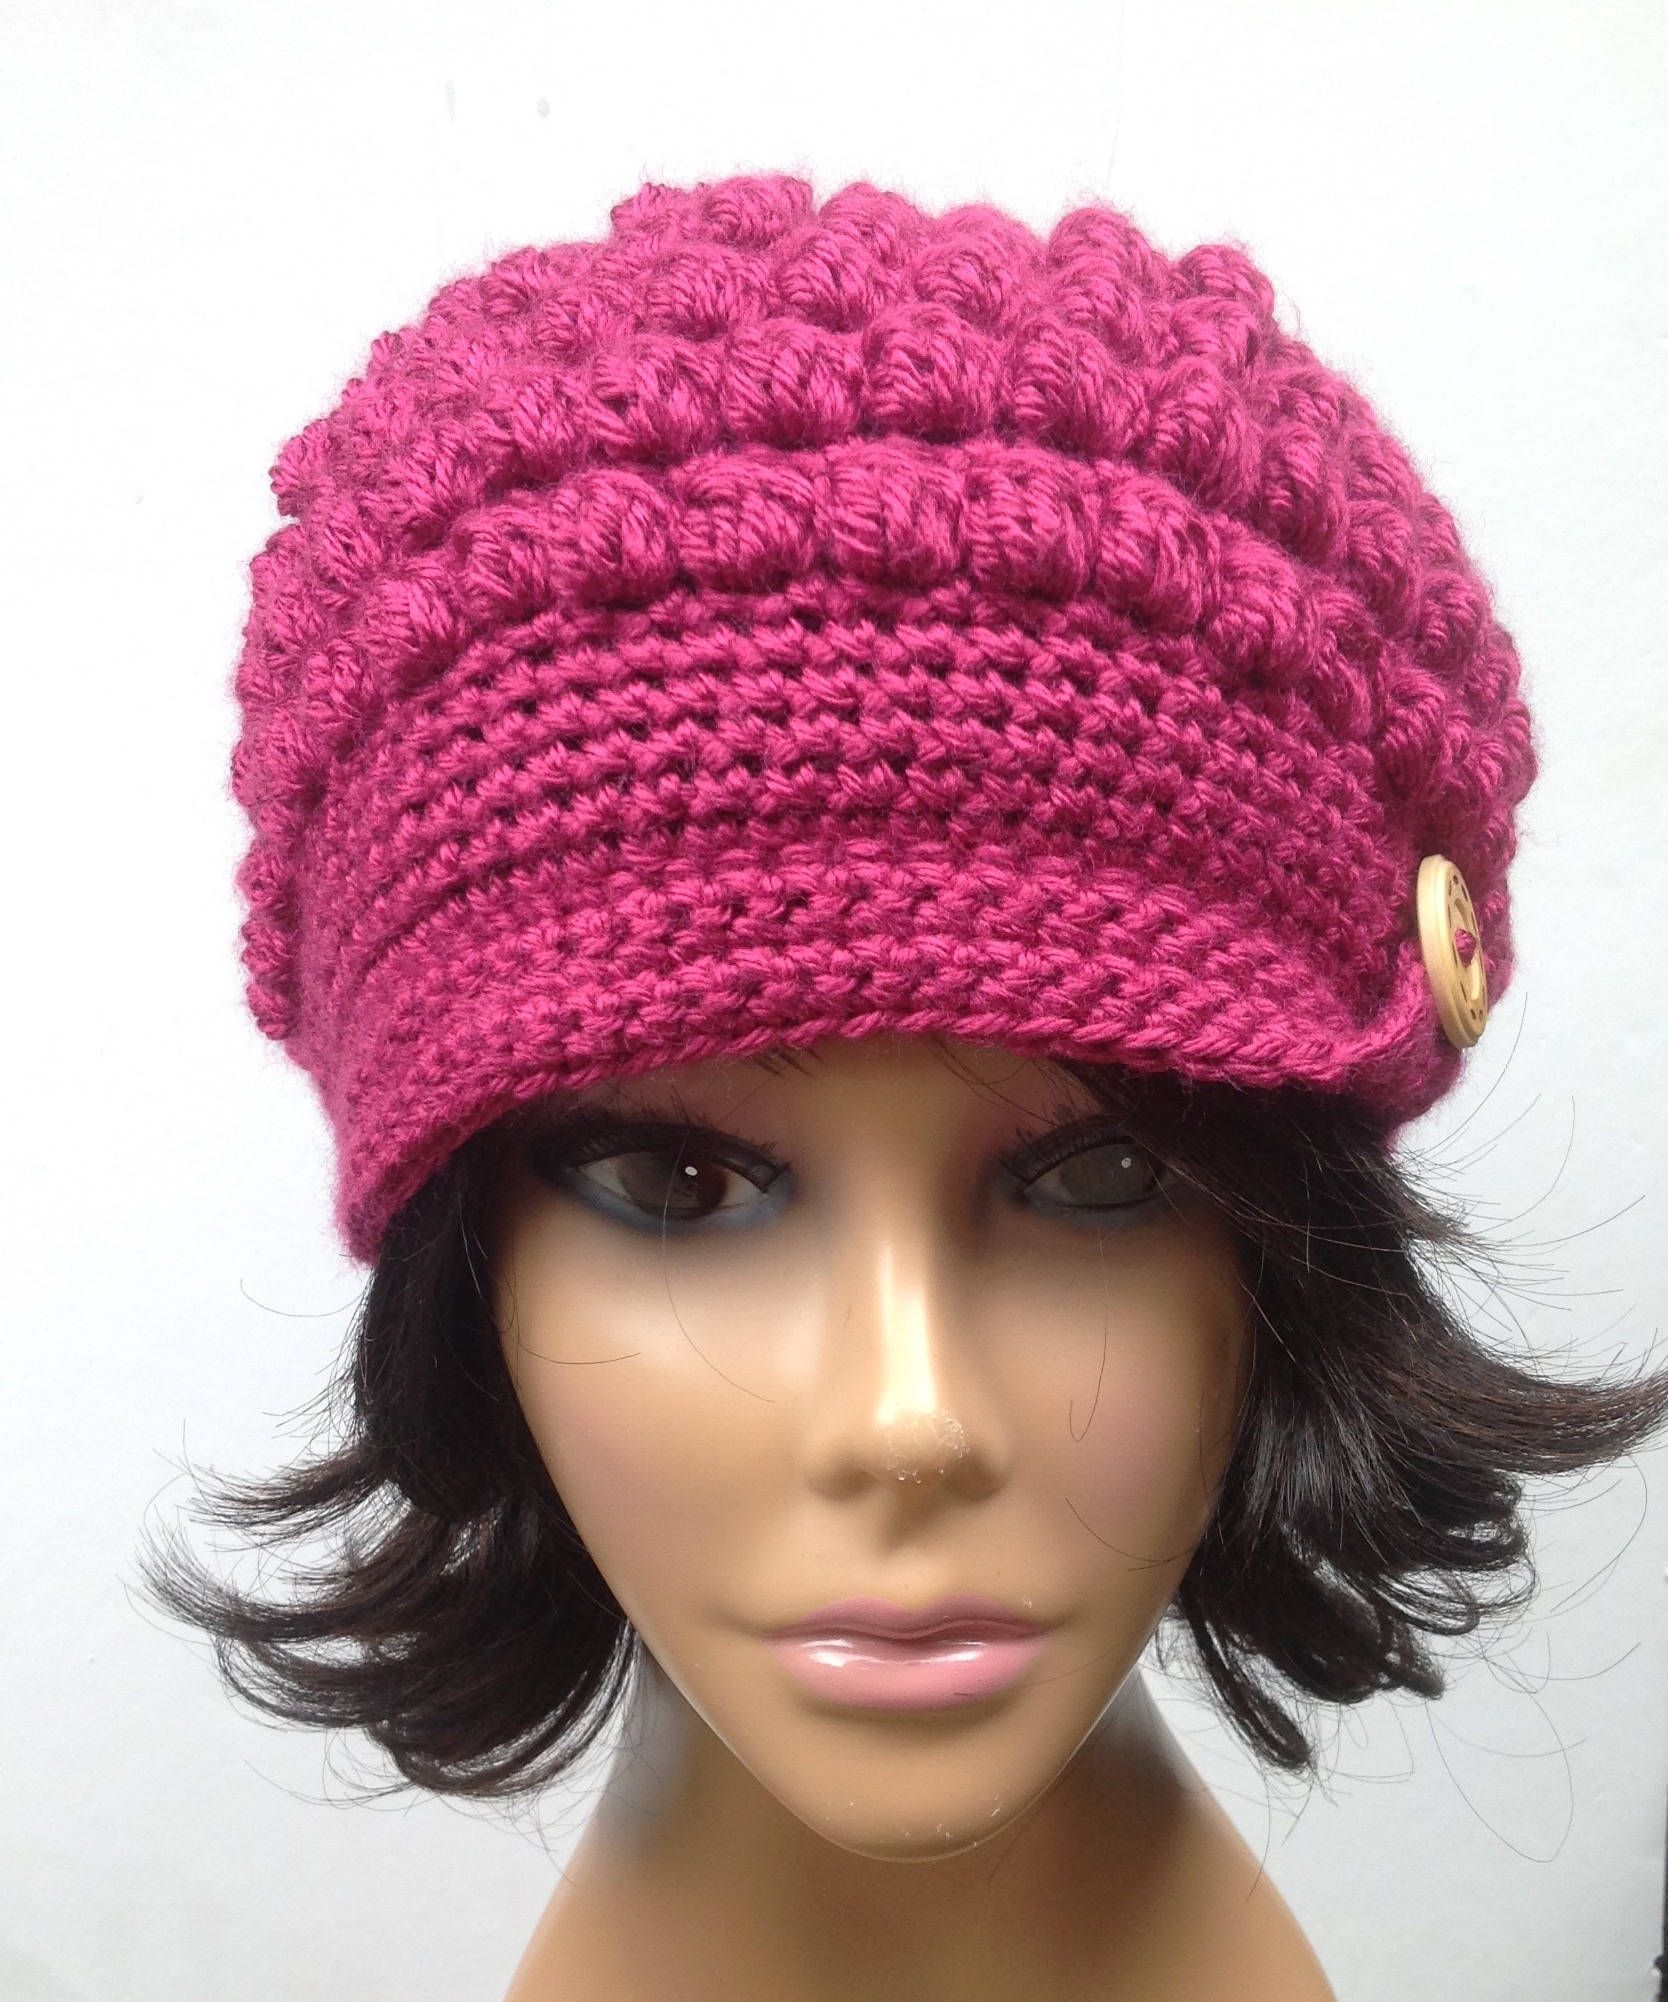 Crochet Slouchy Hat With Brim Pattern Crochet Hat Woman Hat Pink Crochet Slouchy Hat Winter